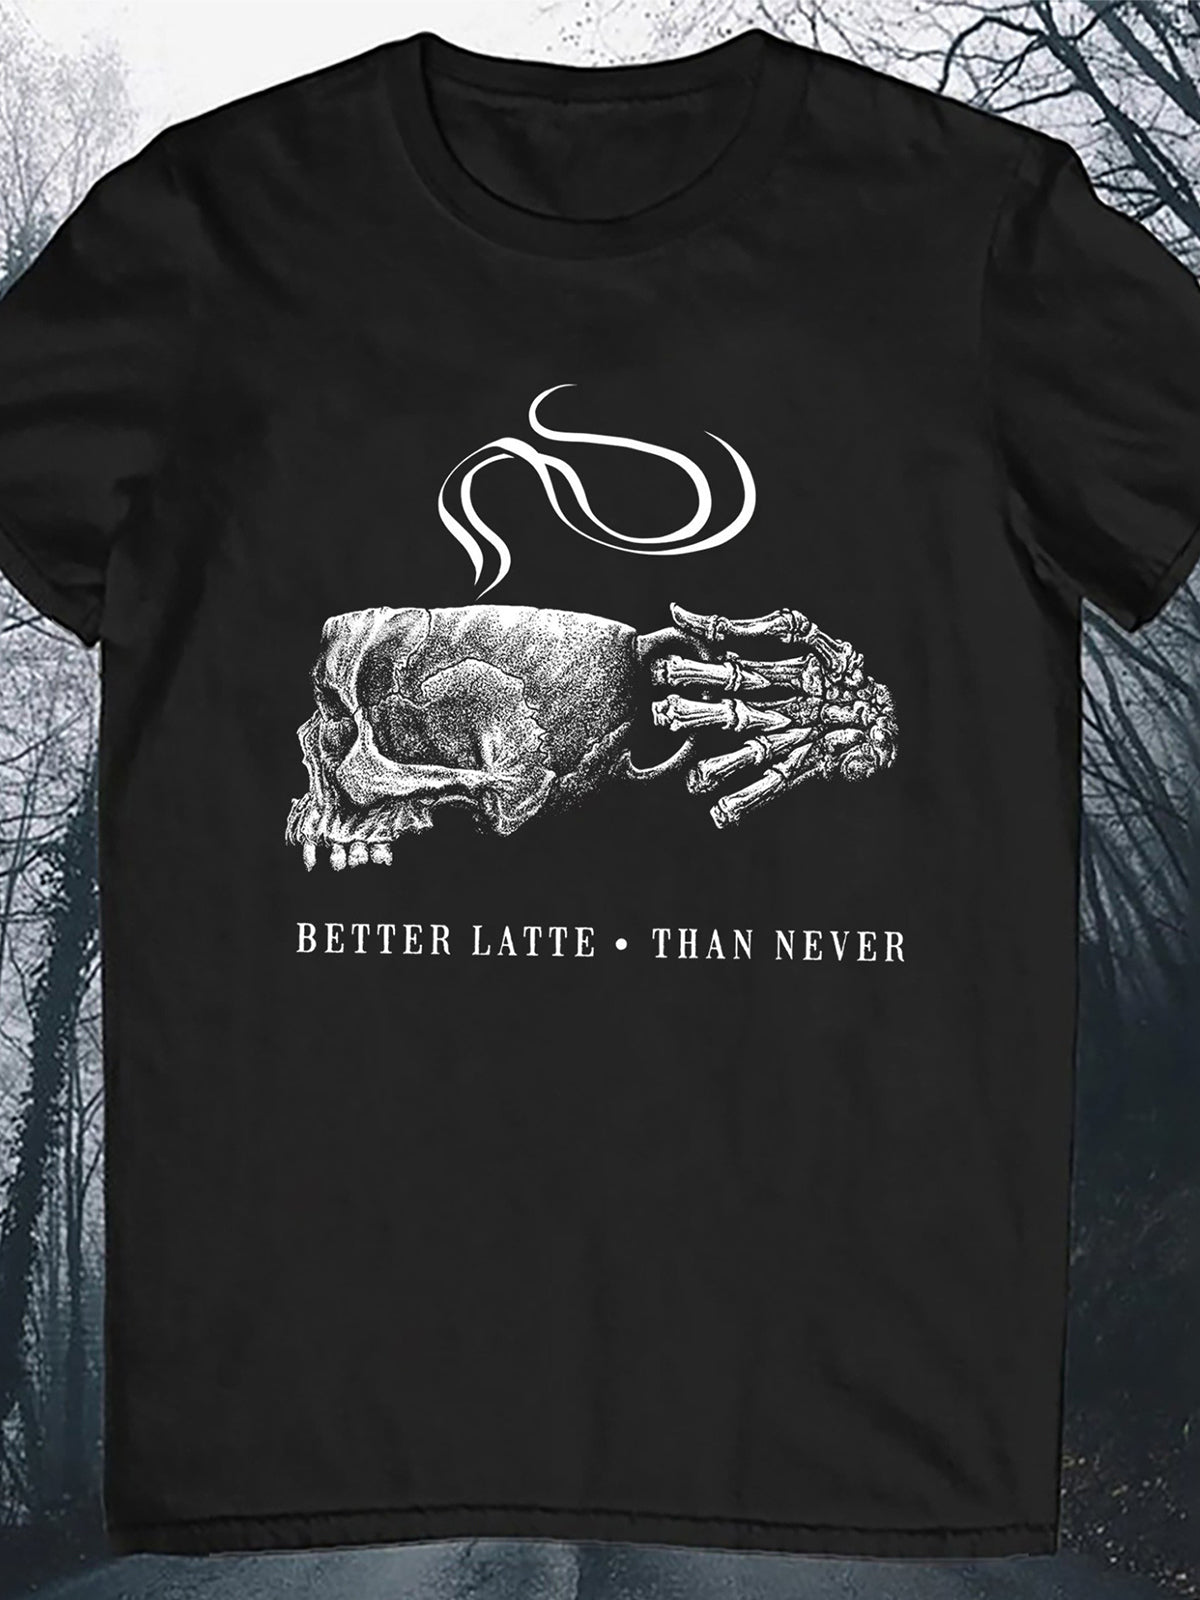 BETTER LATTE · THAN NEVER Printed Round Neck Short Sleeve Men's T-shirt